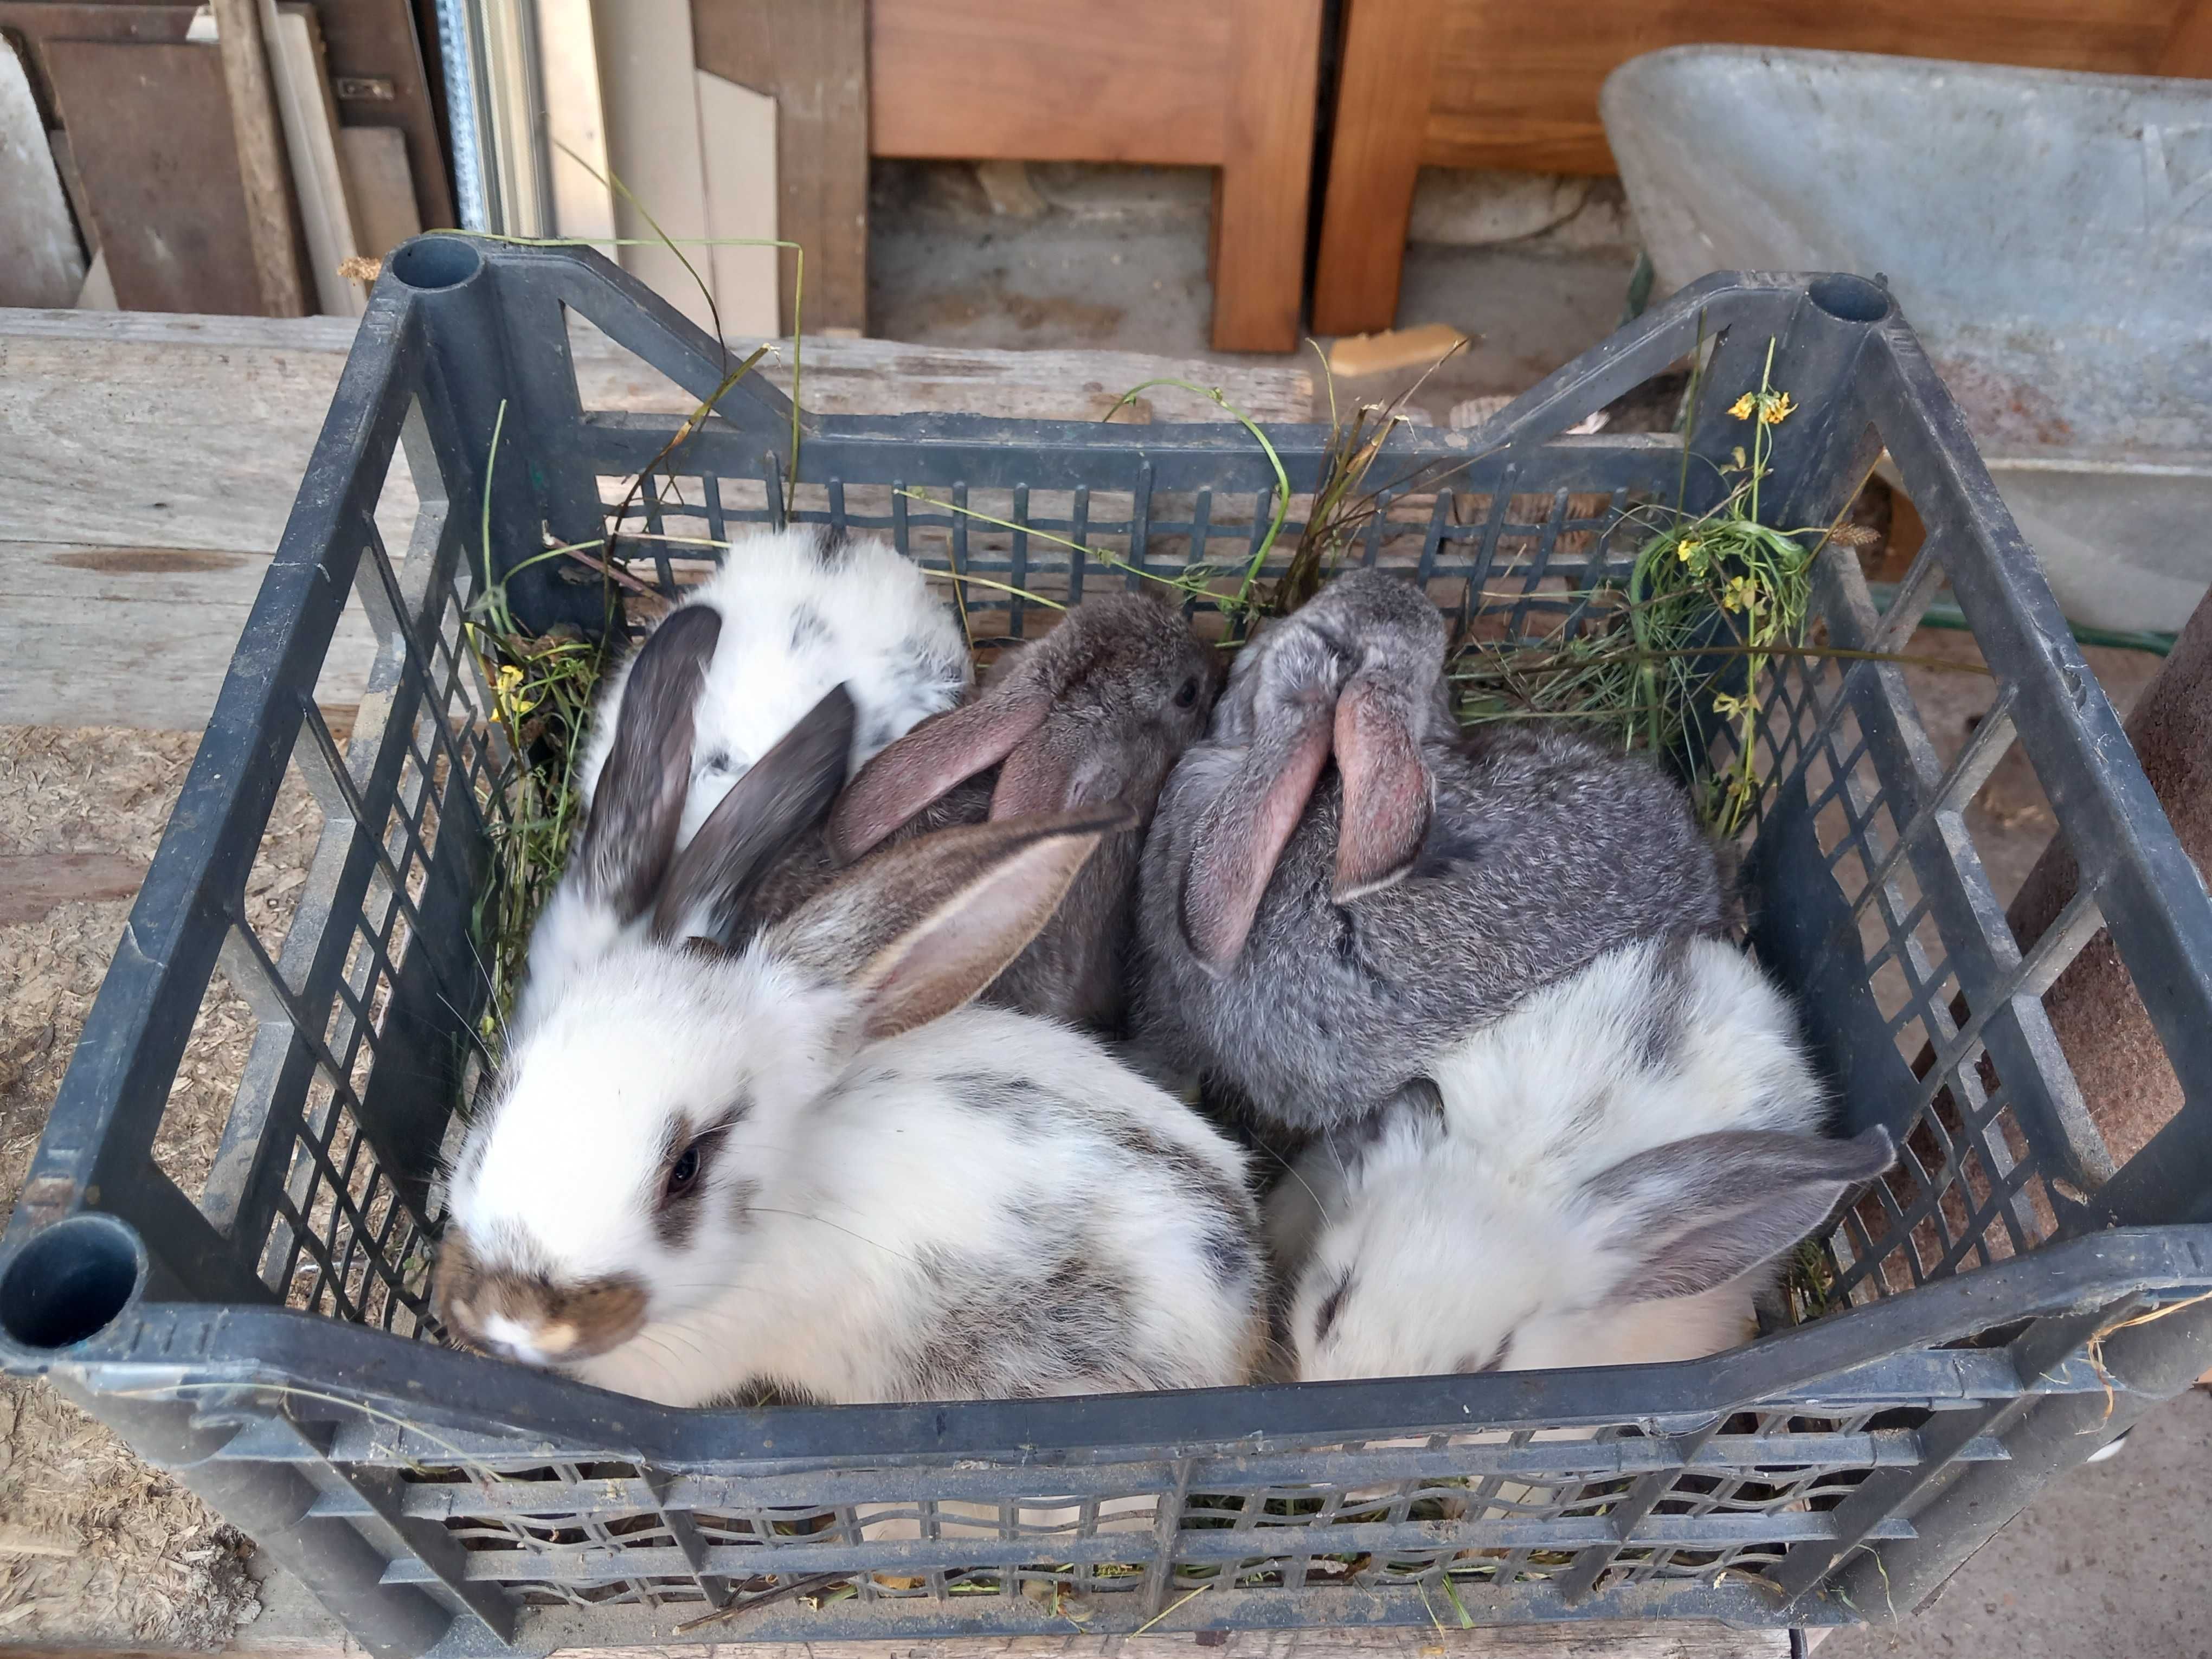 Vând pui de iepuri